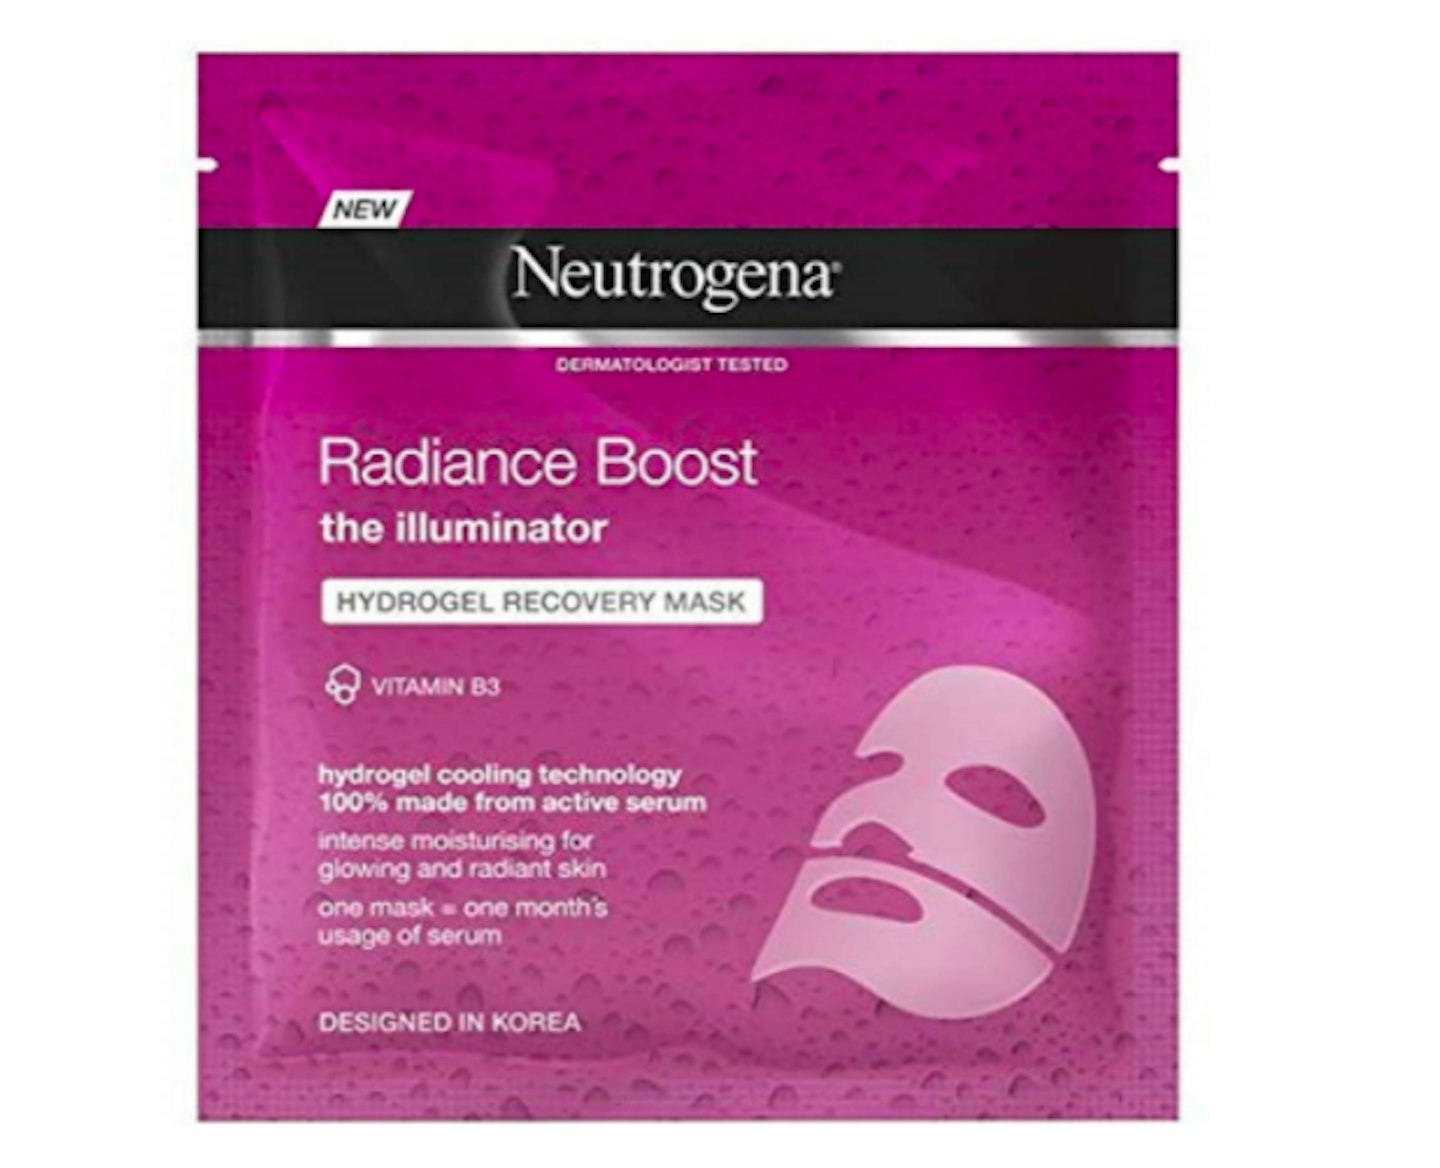 Neutrogena Radiance Boost Hydrogel Recovery Mask